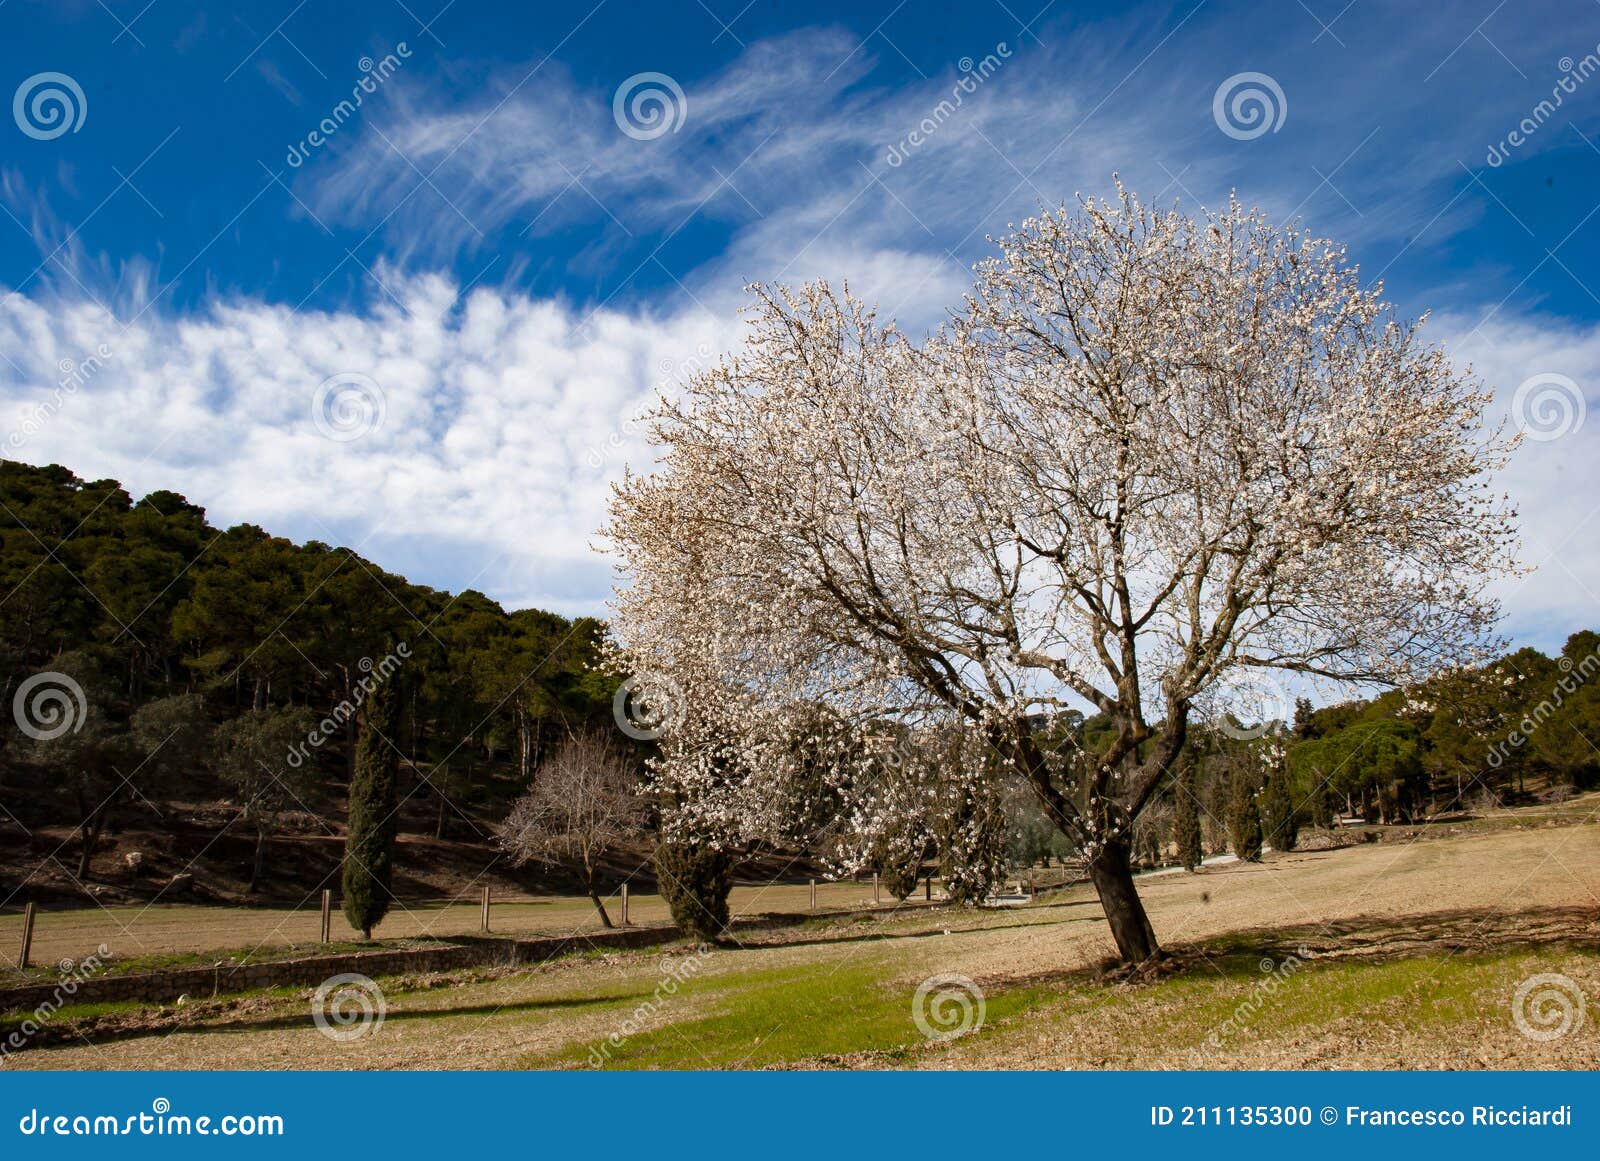 flowering tree montgri massif torroella de montgri cataluna spain